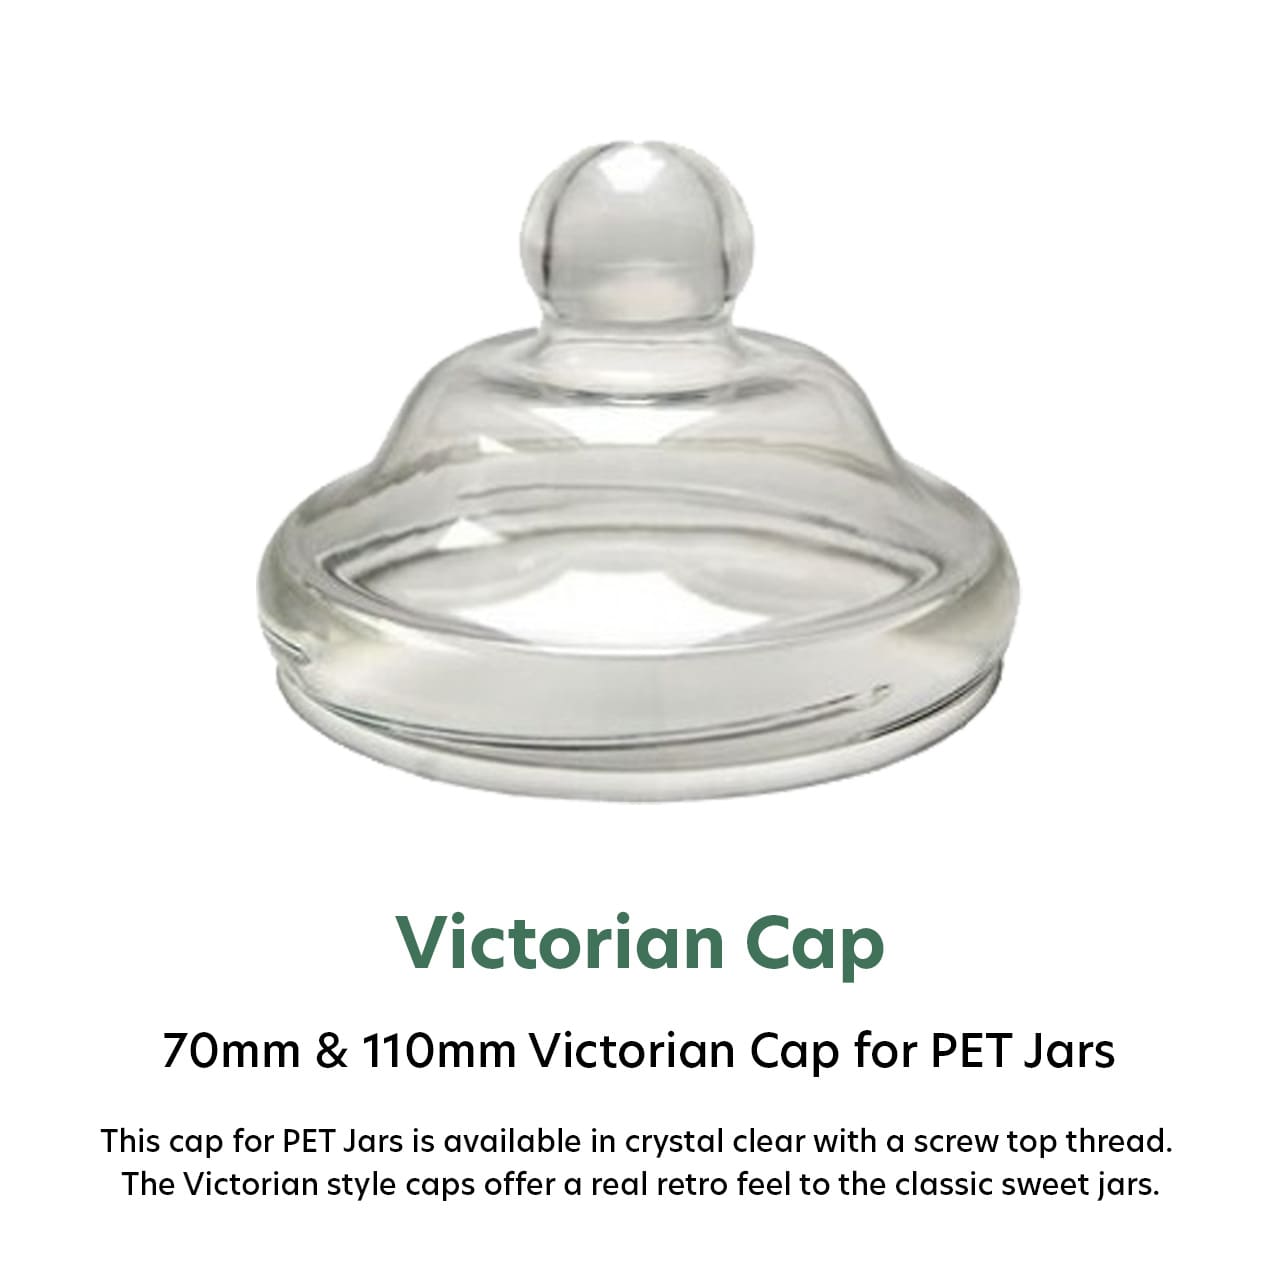 Victorian cap for PET jars